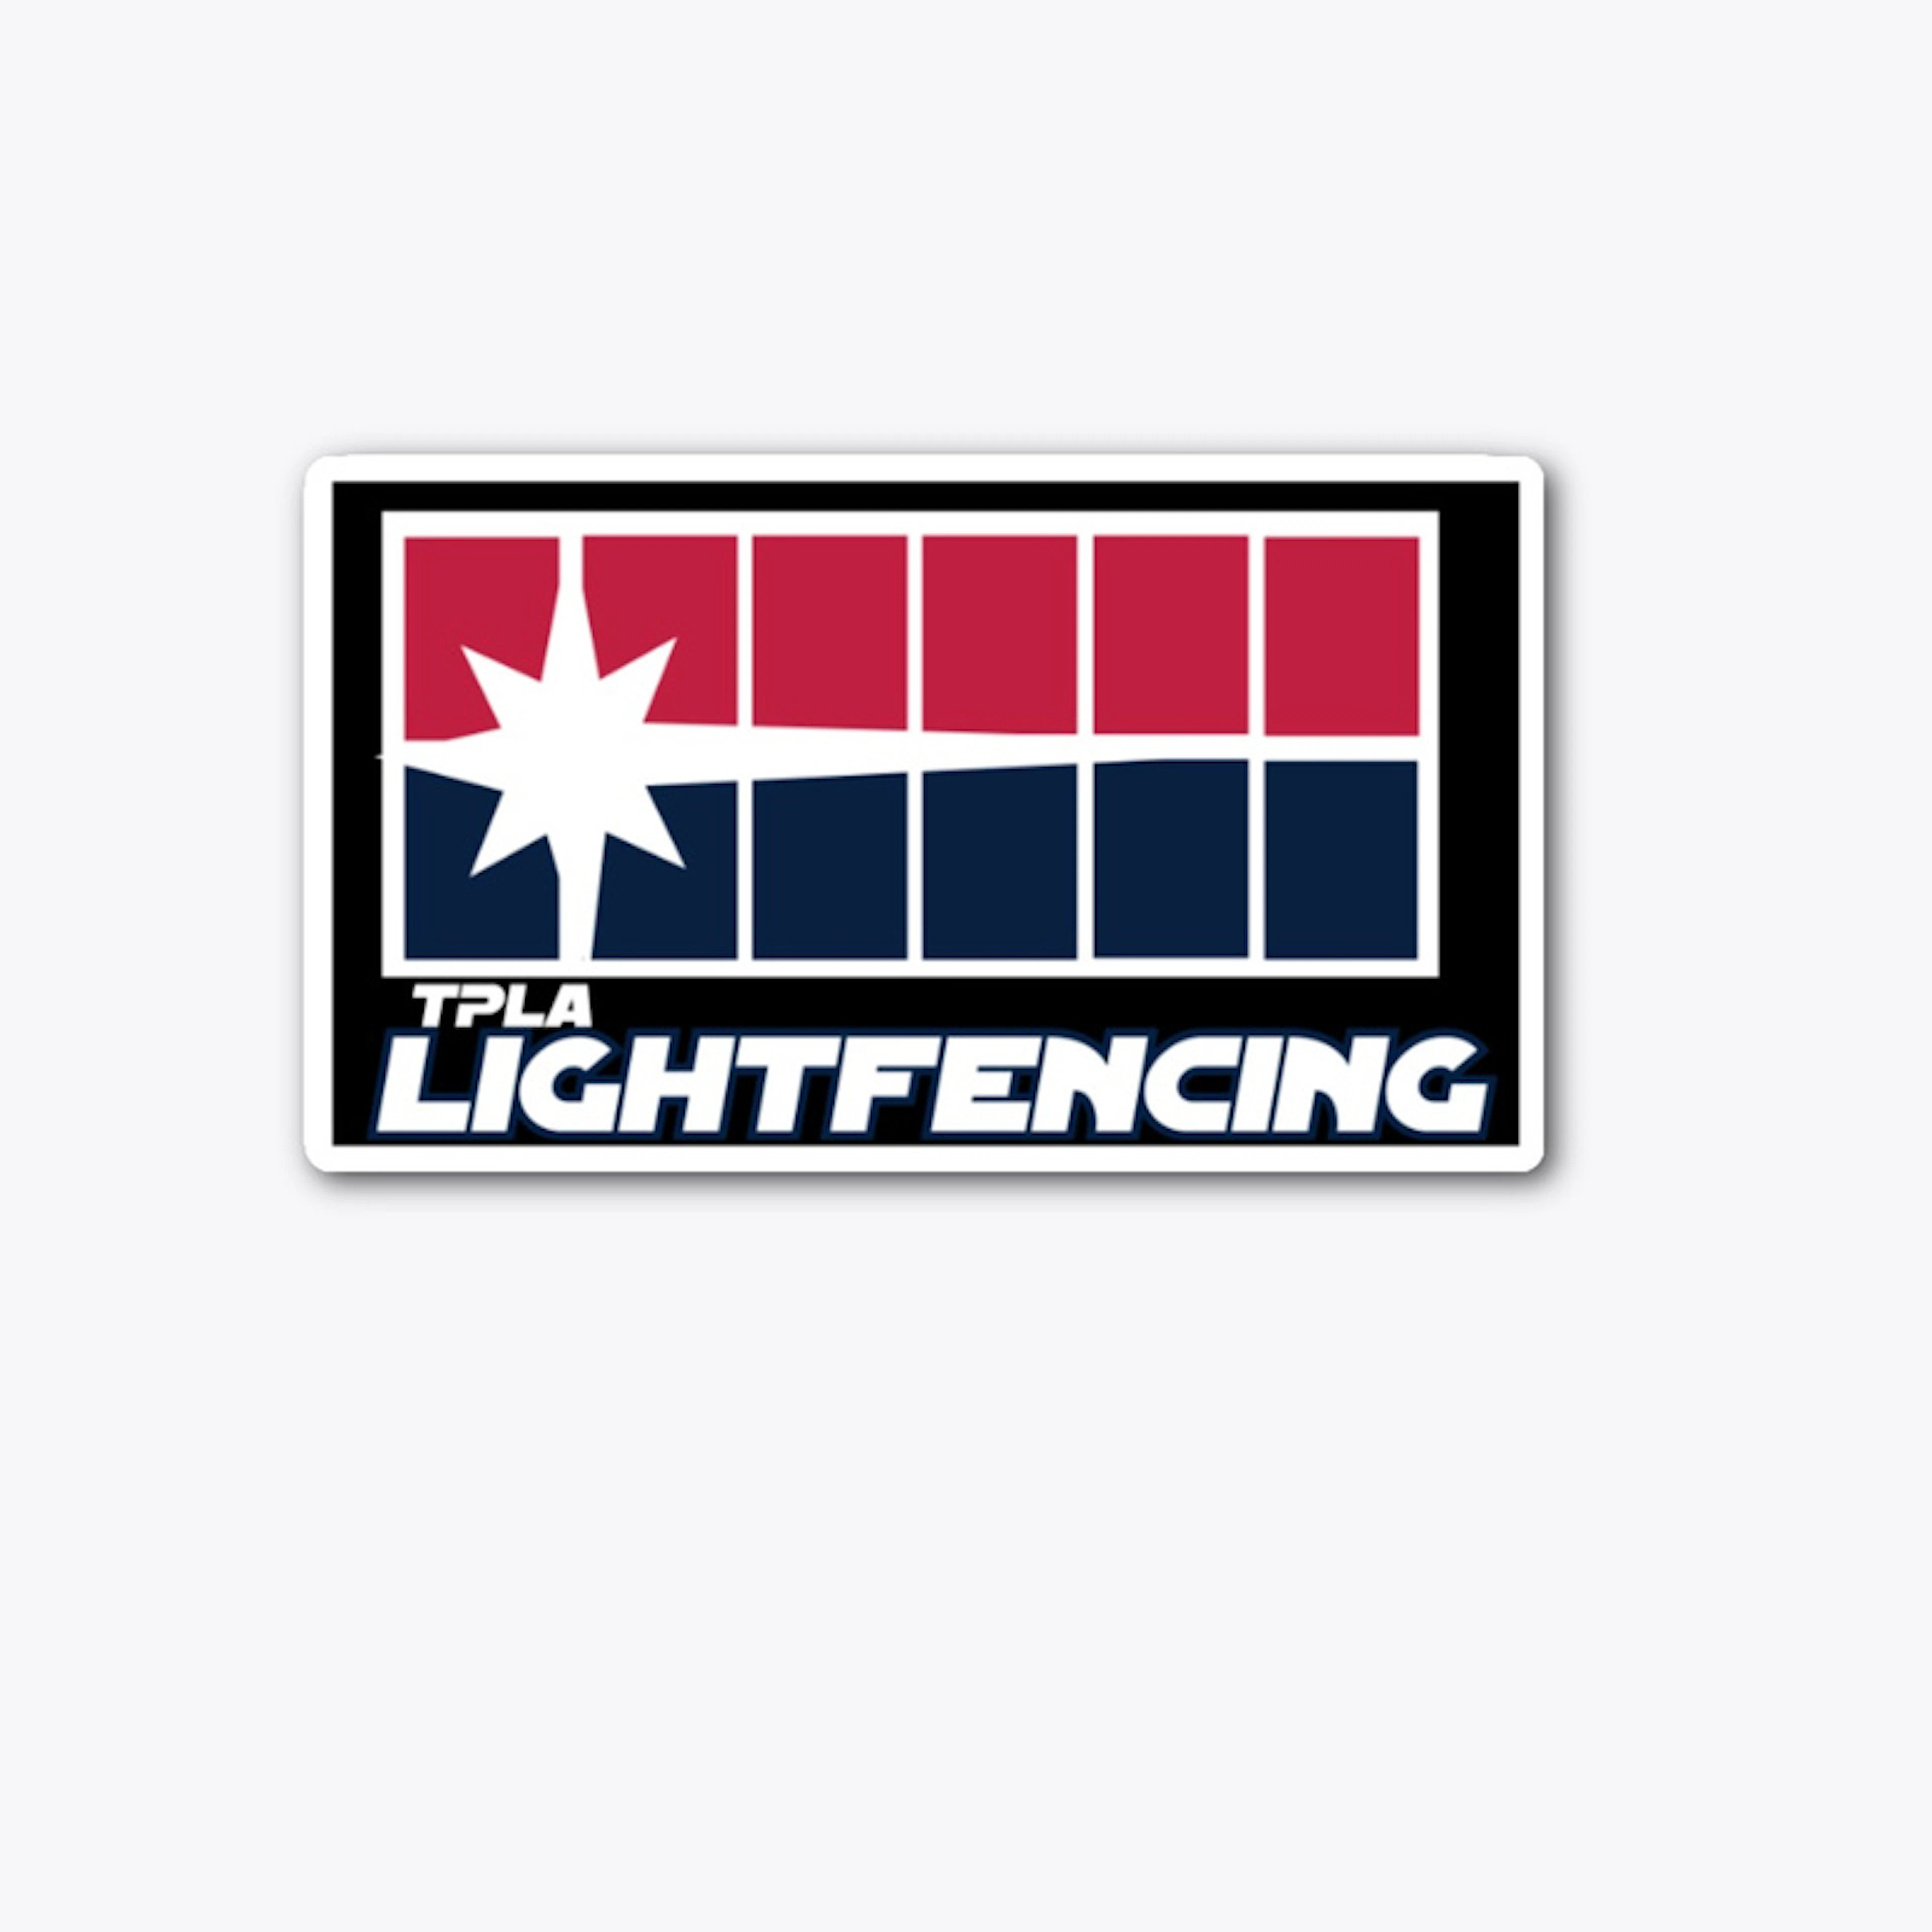 TPLA Lightfencing